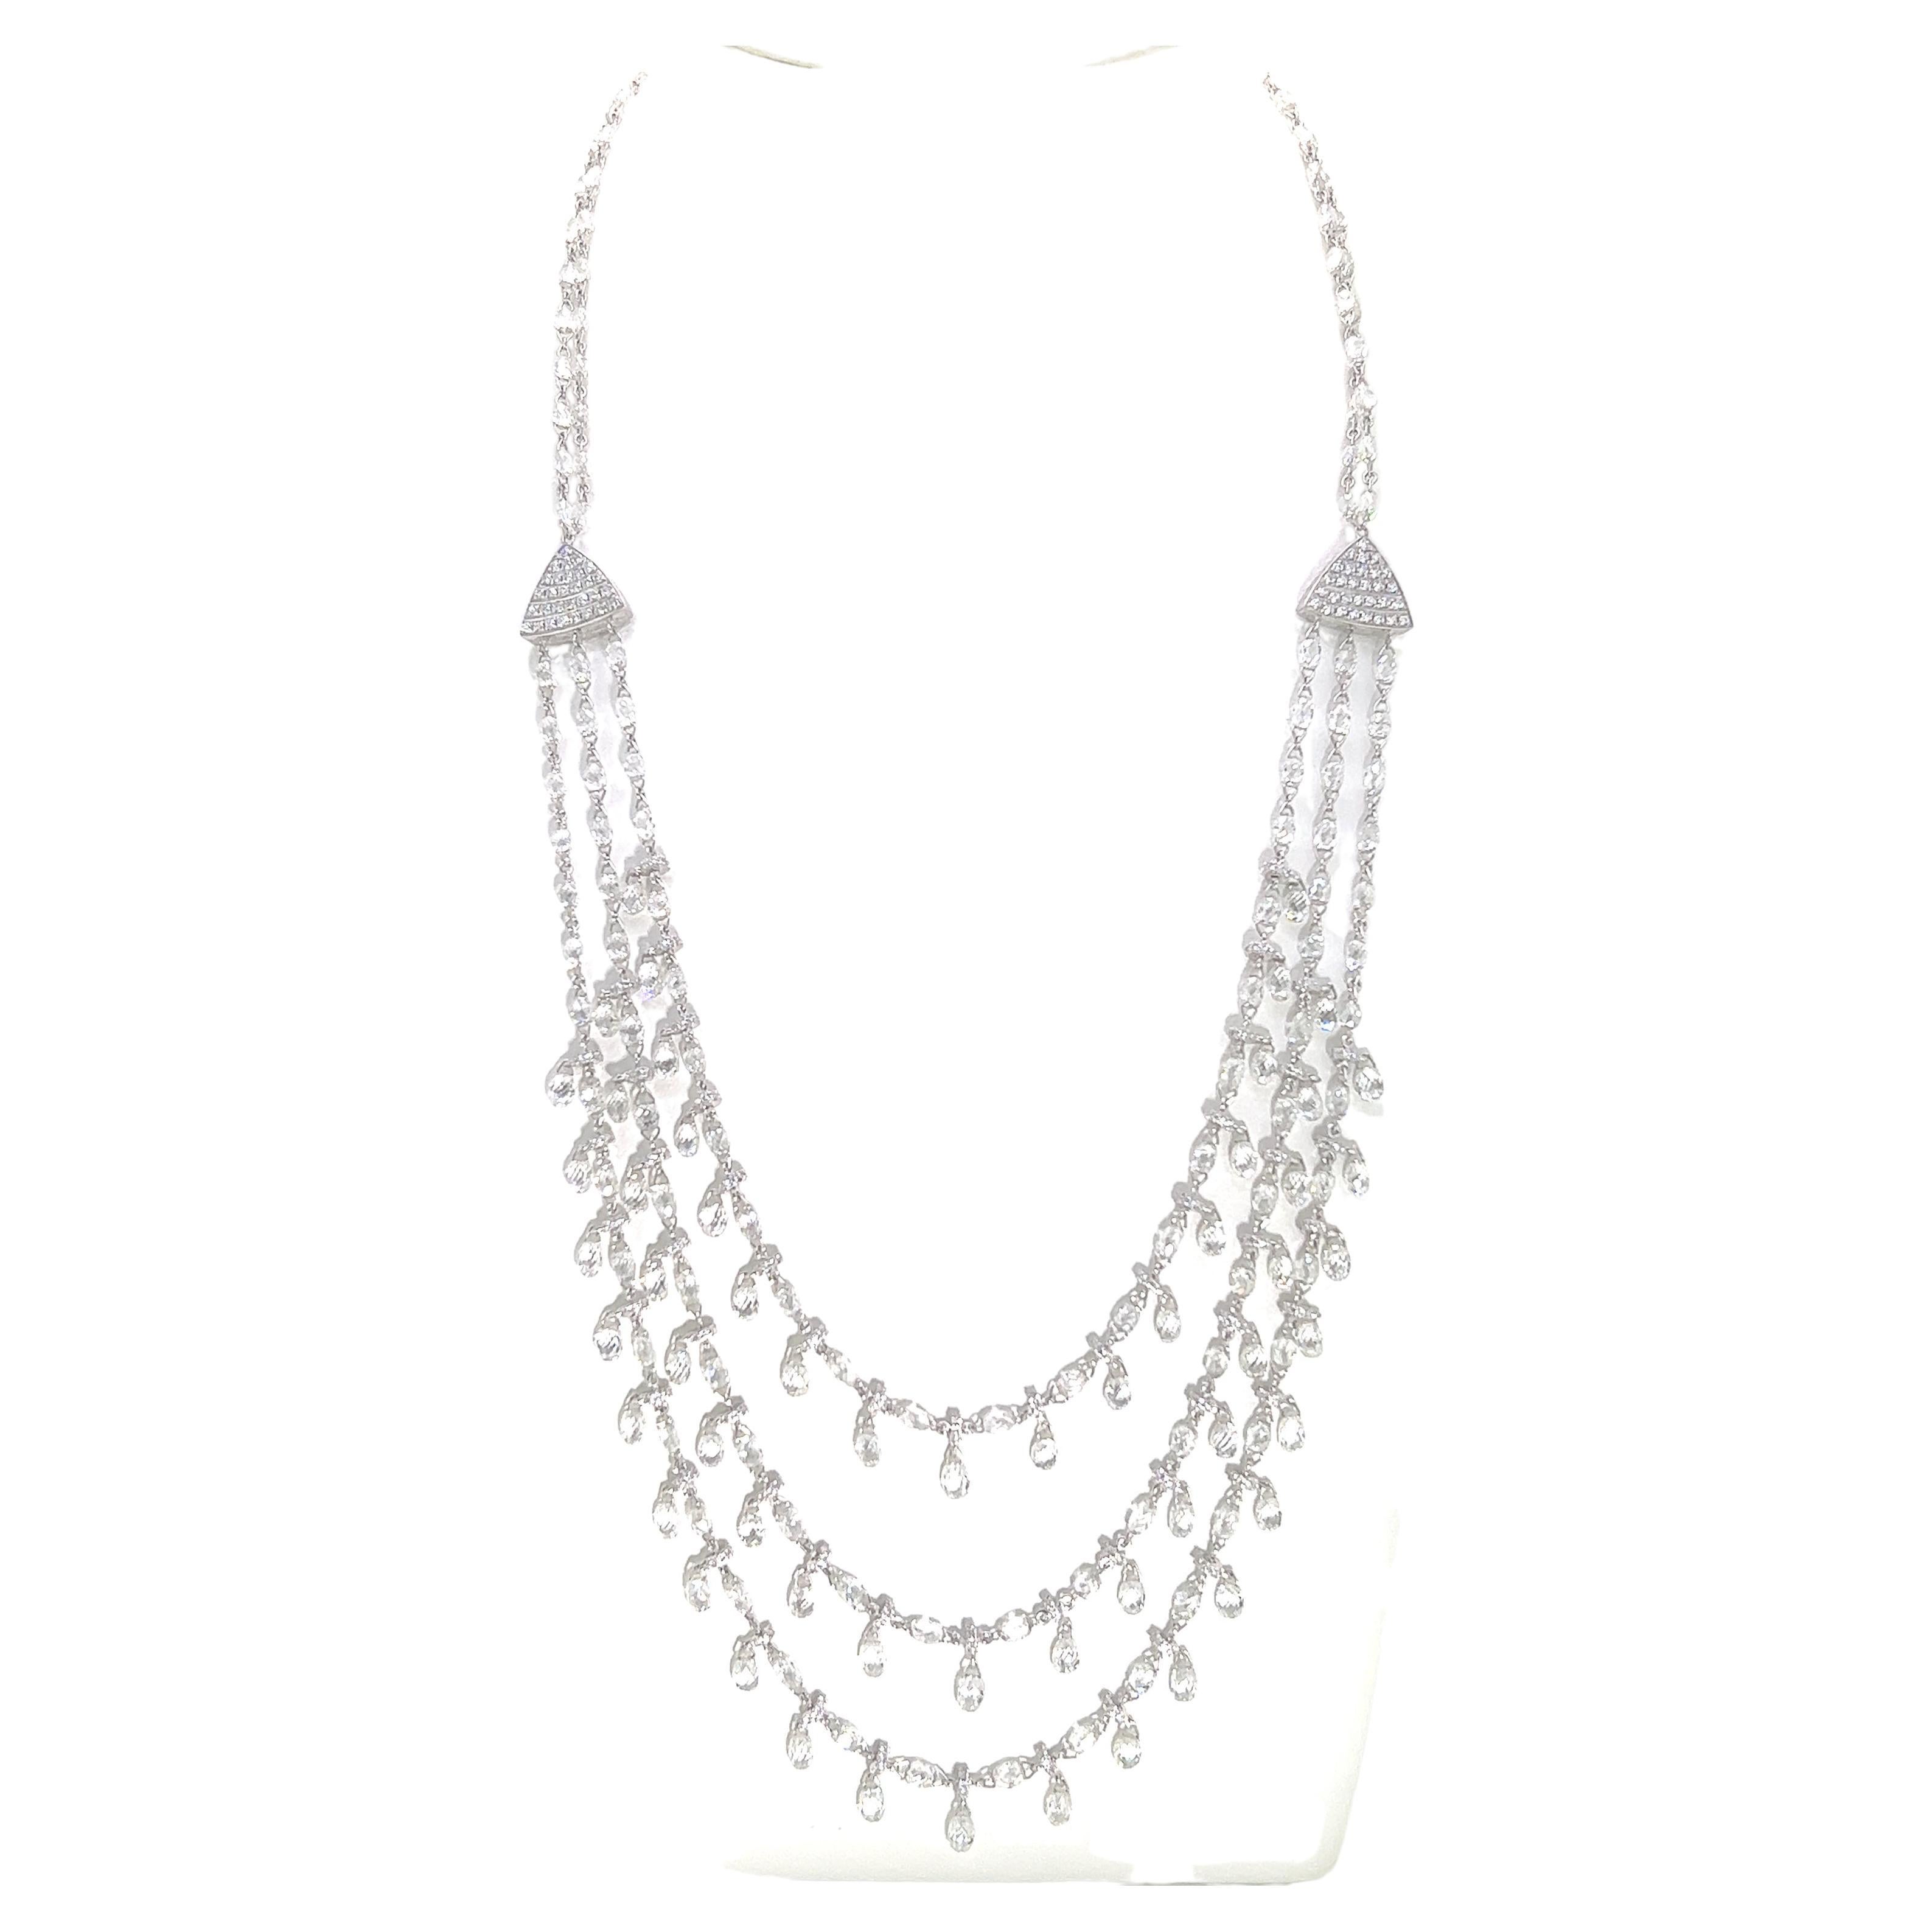 38.89 Carat Vintage Briolette Cut Diamond Necklace Set on 18K White Gold For Sale